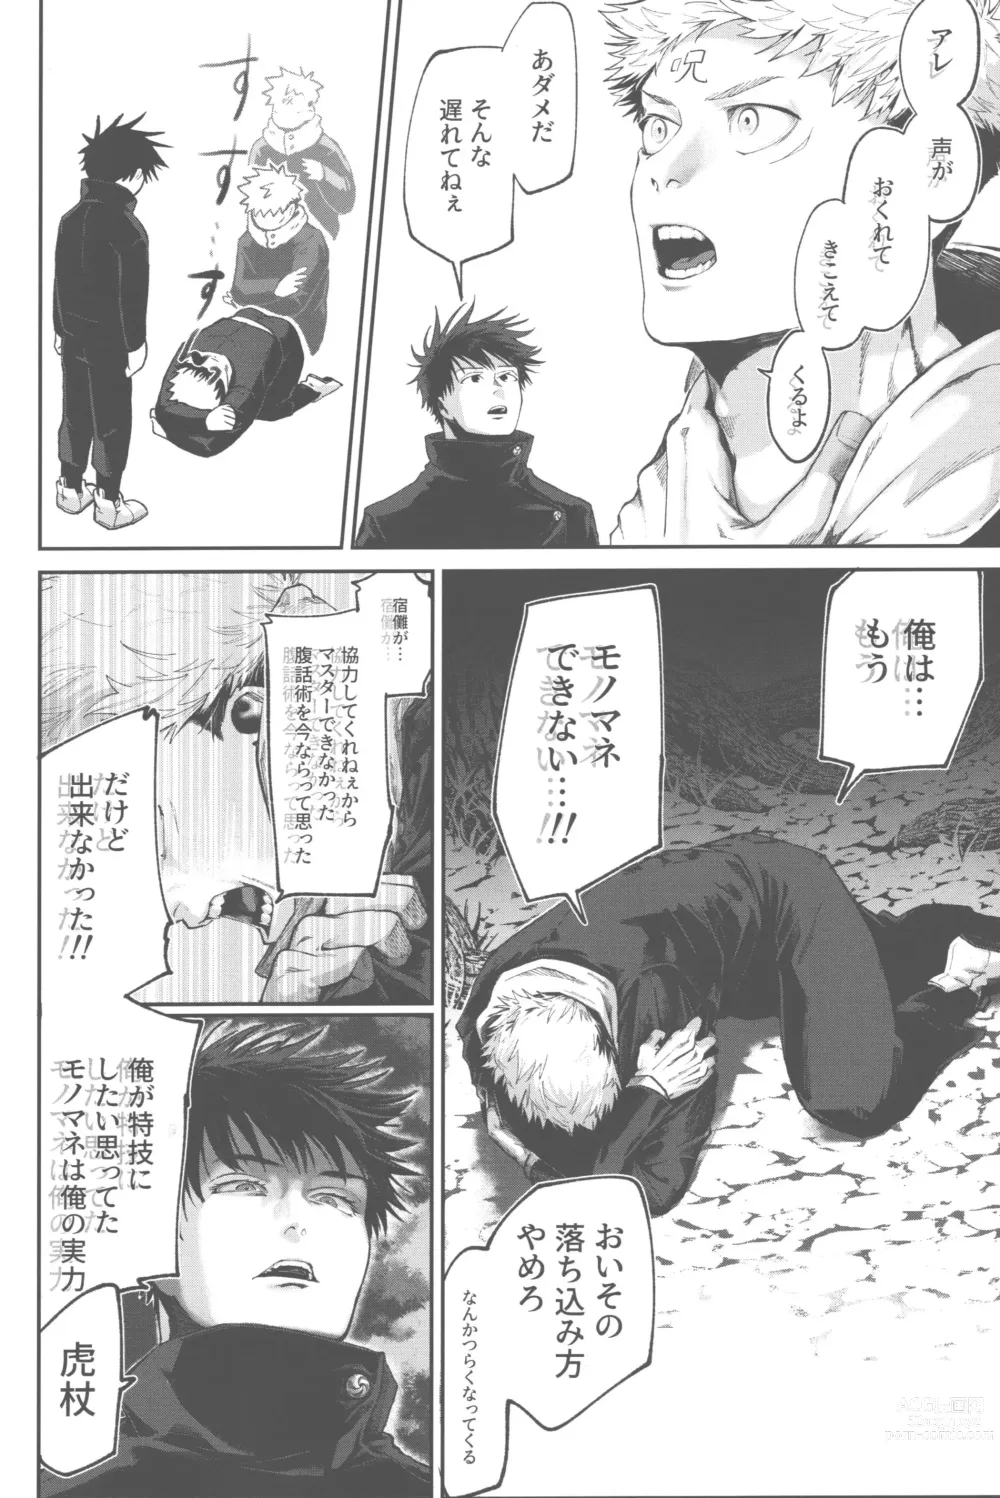 Page 35 of doujinshi Mune no Uchi Seiippai